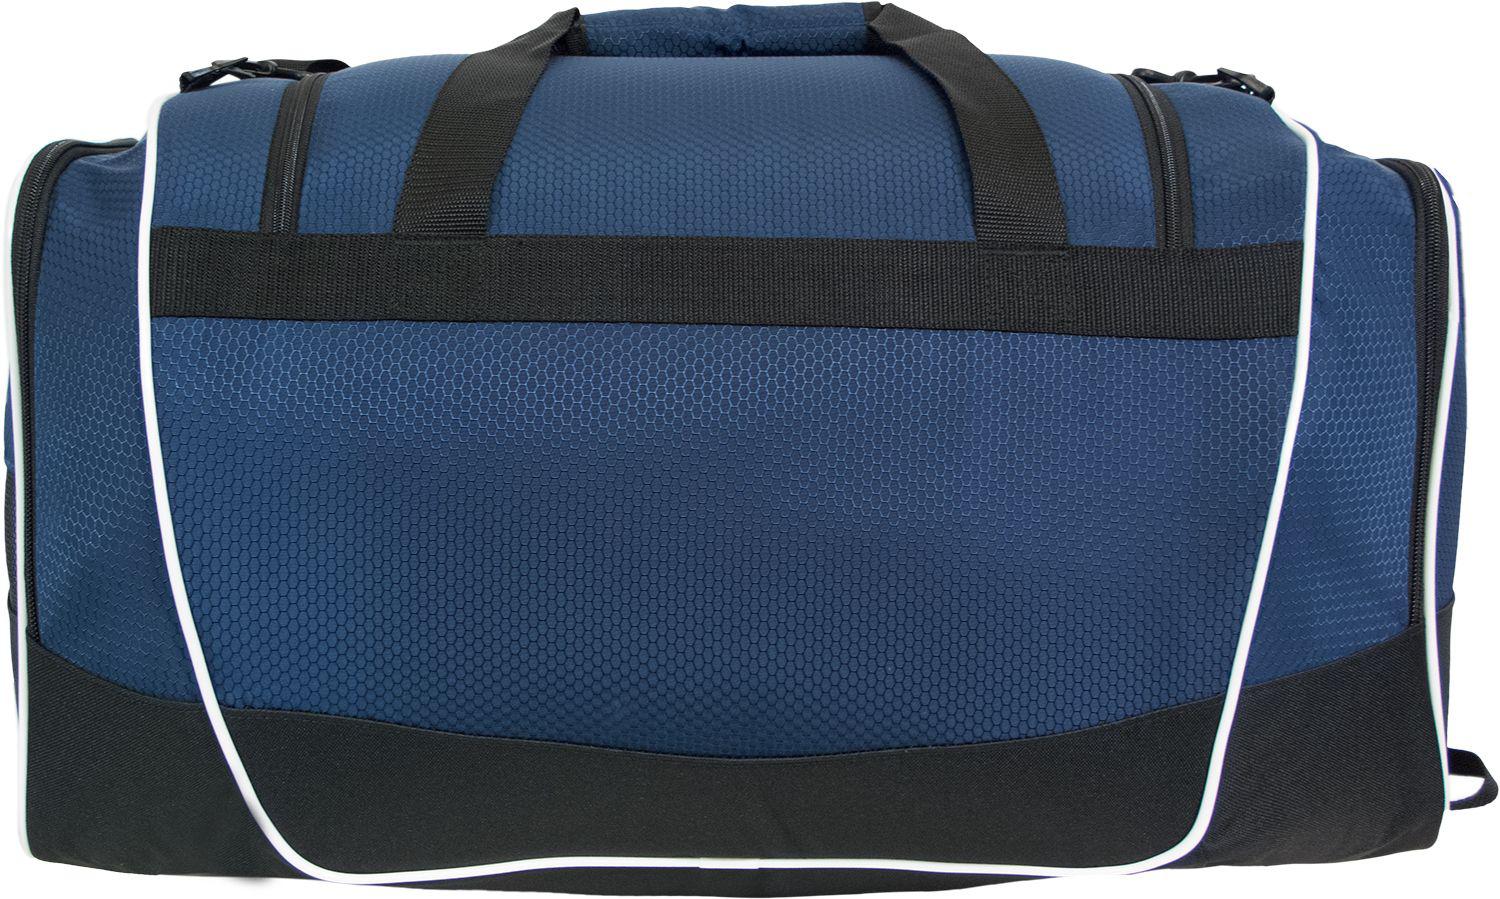 adidas Synthetic Defender Medium Duffle Bag in Blue for Men - Lyst